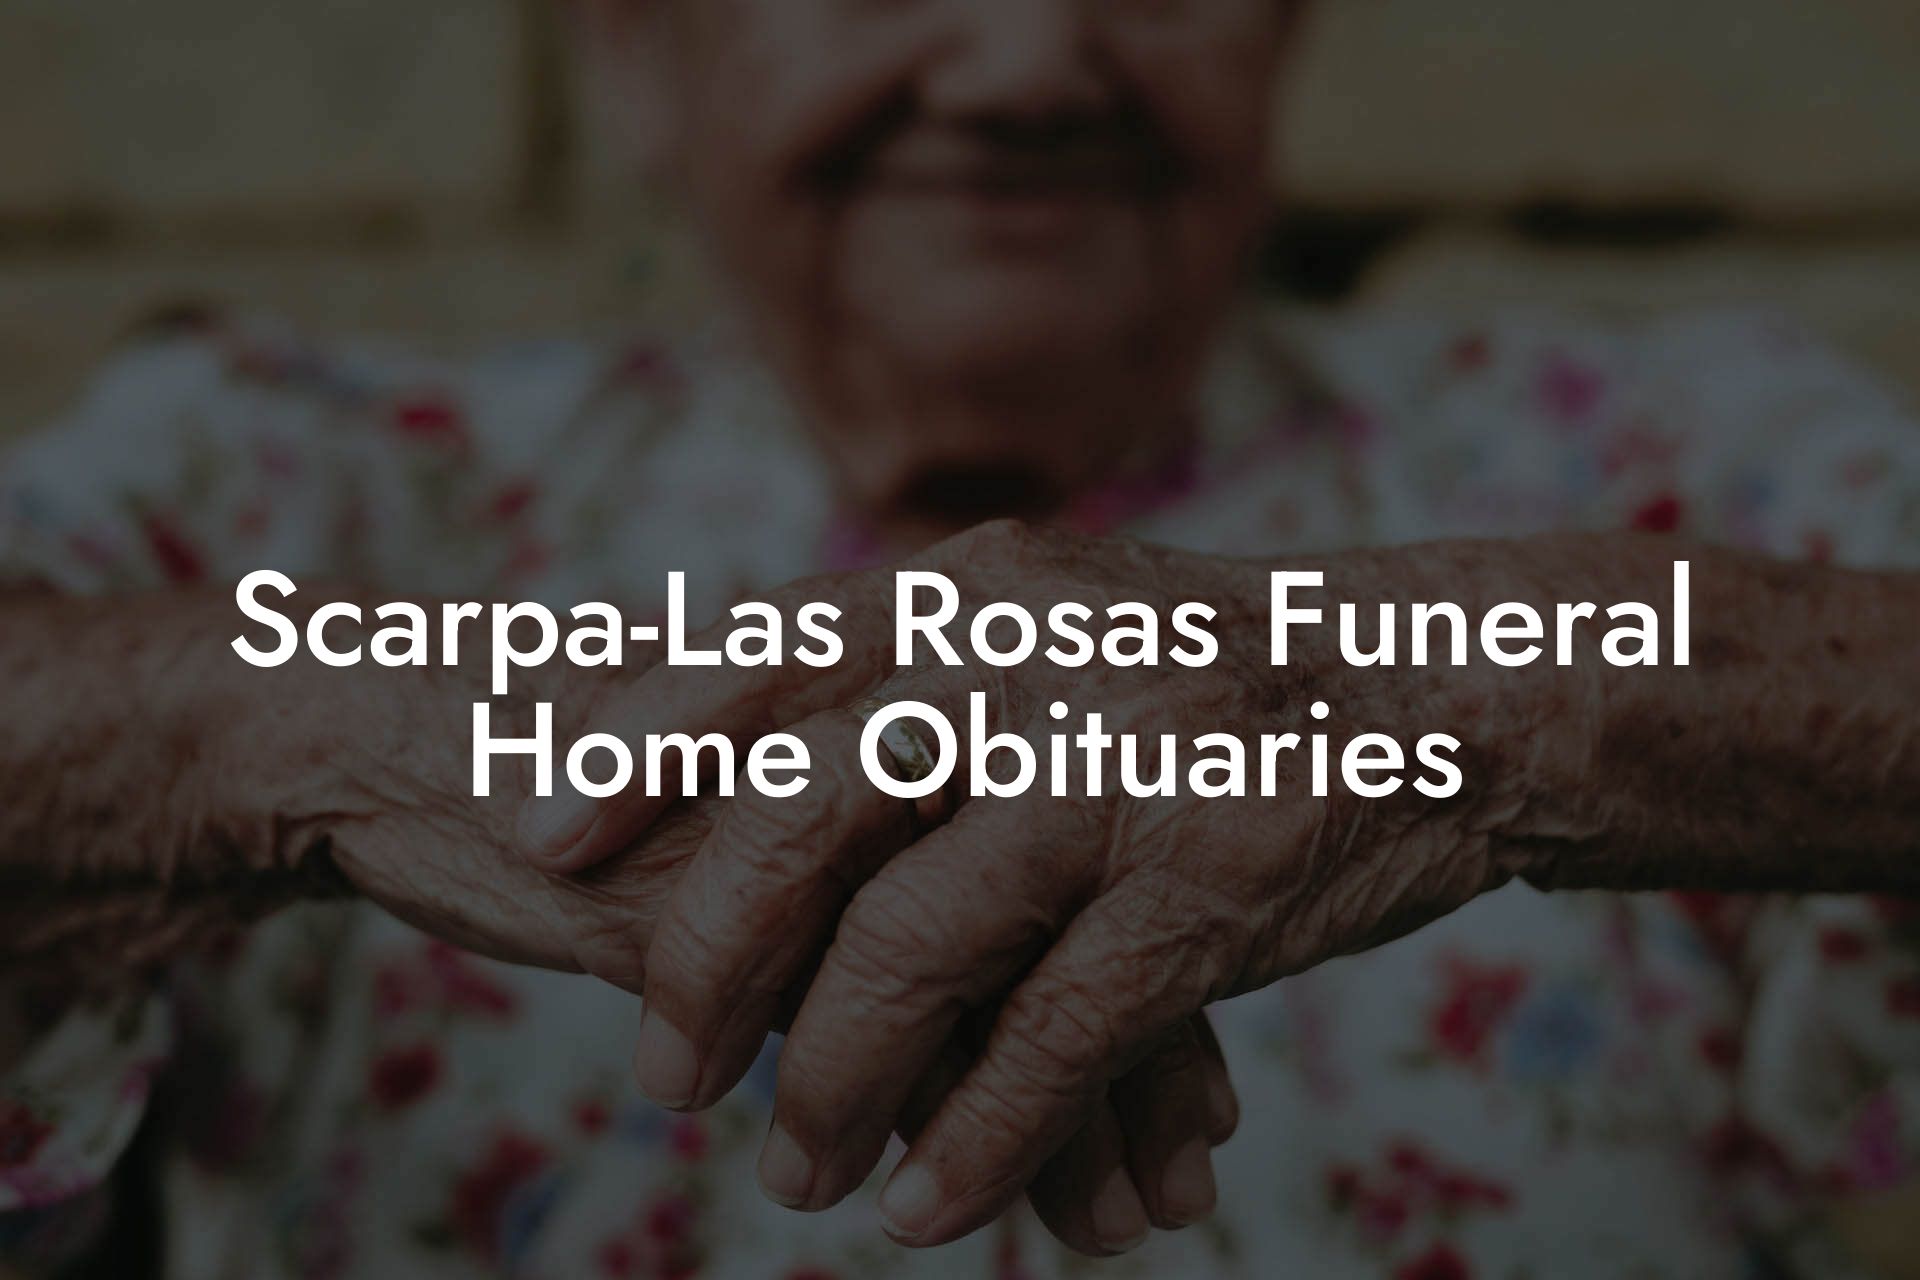 Scarpa-Las Rosas Funeral Home Obituaries